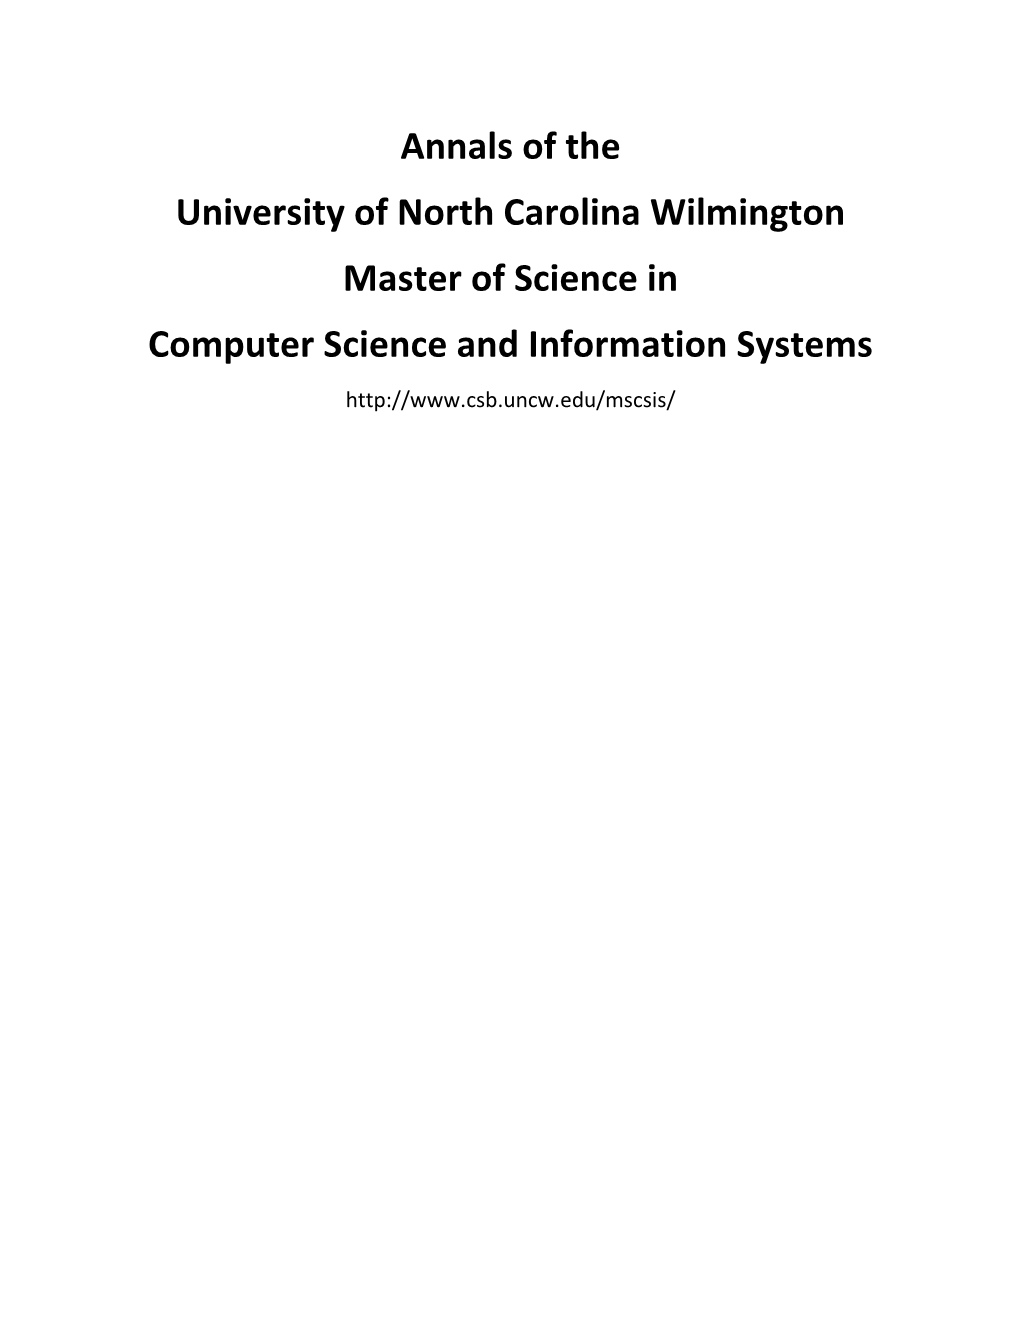 Annals of the University of North Carolina Wilmington Master Of